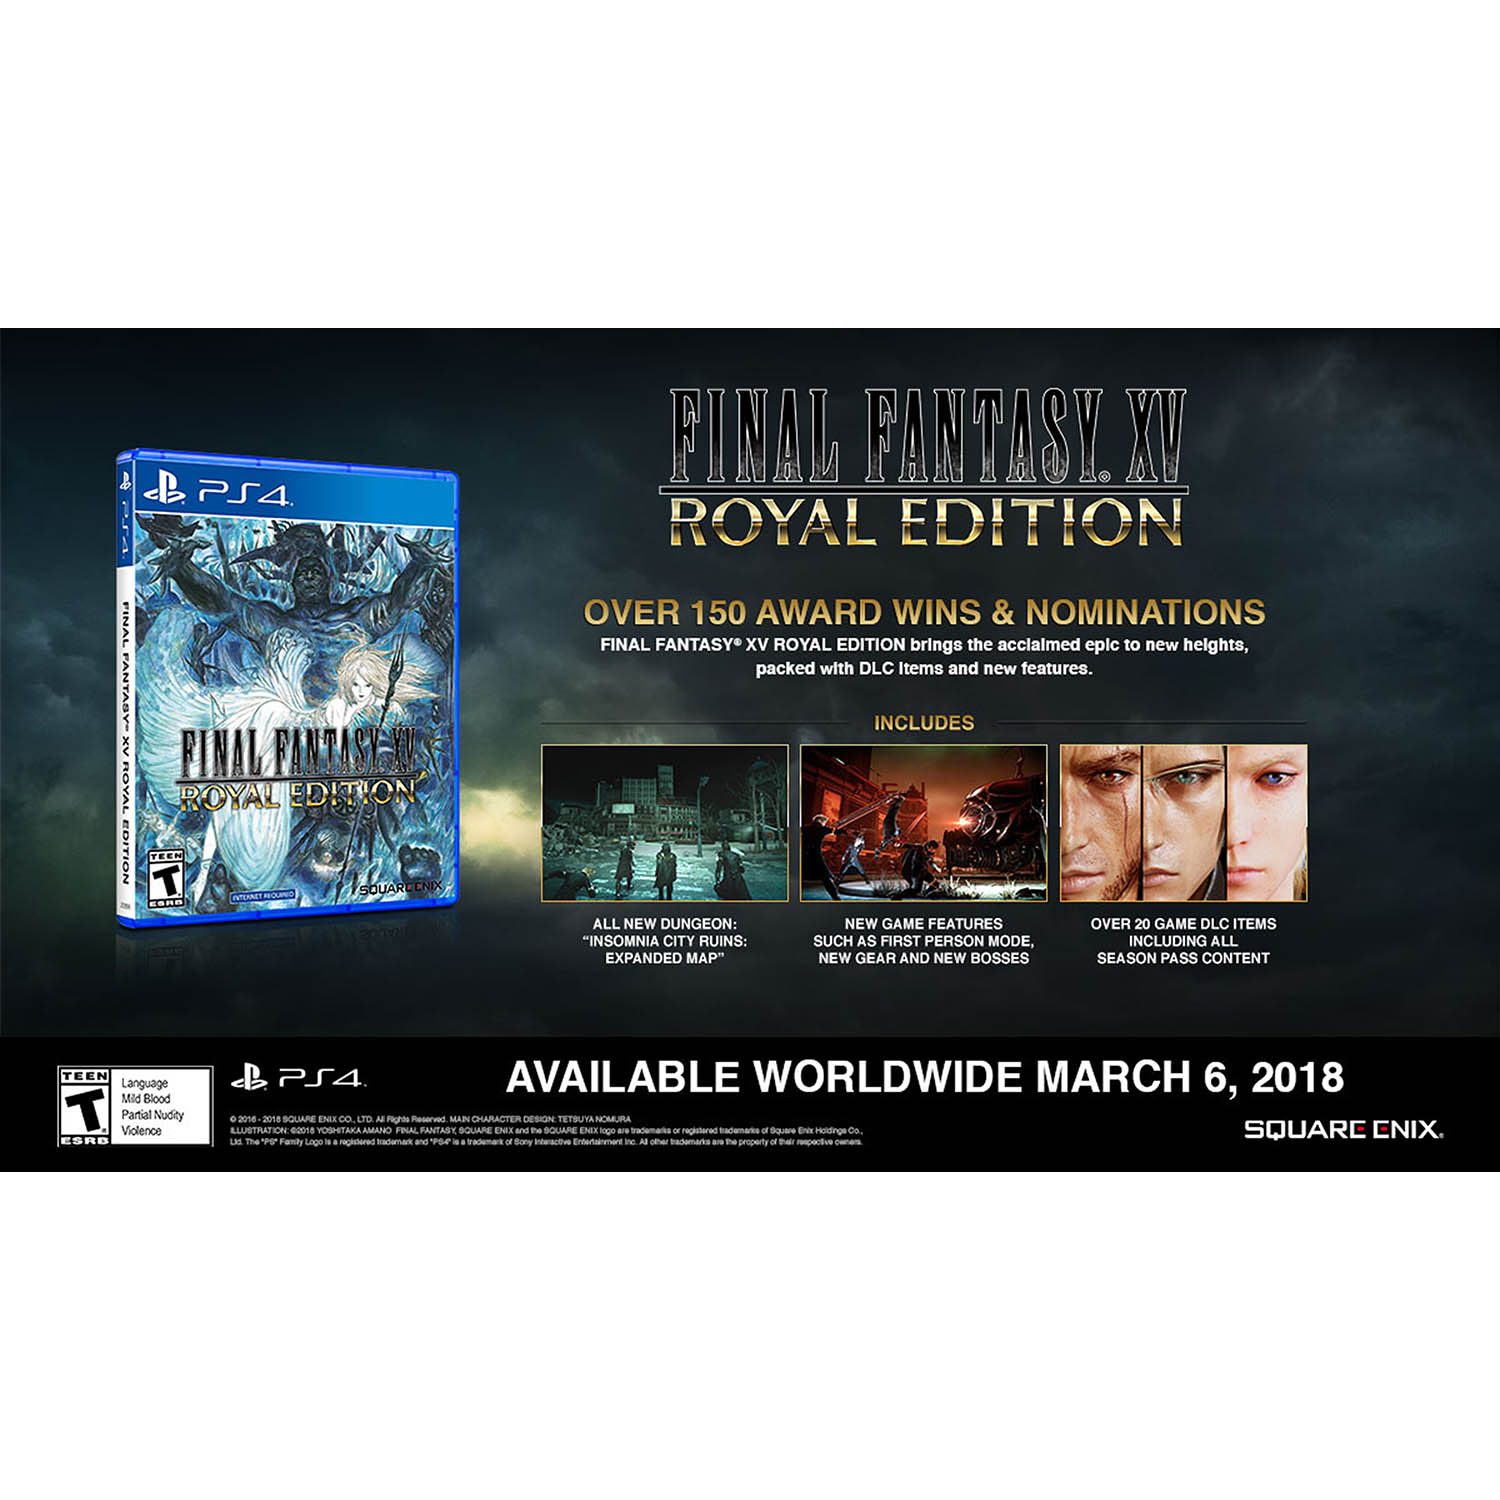 Final Fantasy XV Royal Edition, Square Enix, PlayStation 4, [Physical], 662248920764 - image 2 of 13